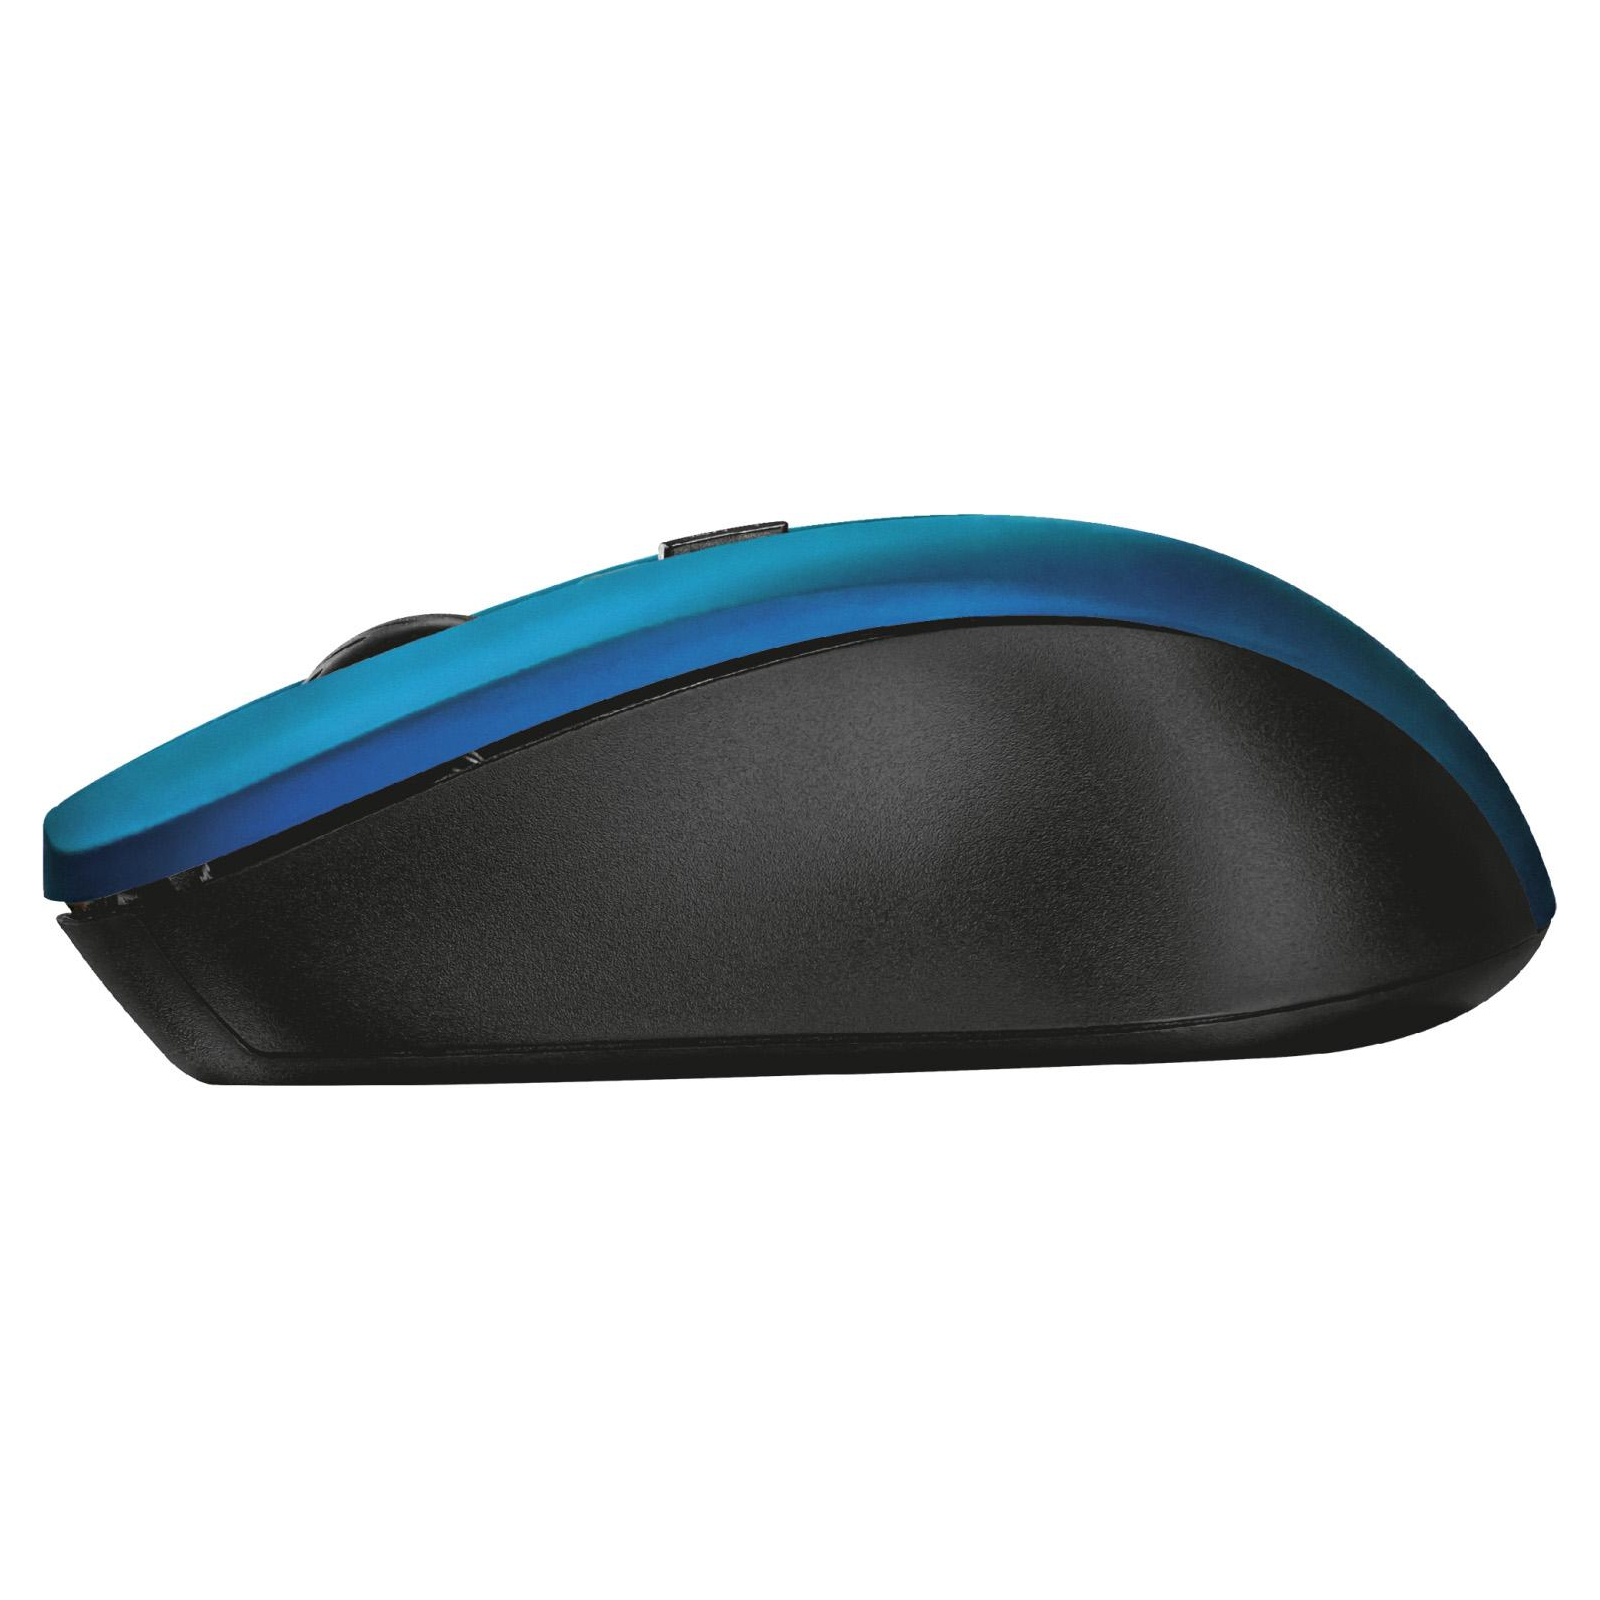 Мышка Trust Mydo Silent wireless mouse blue (21870) изображение 3